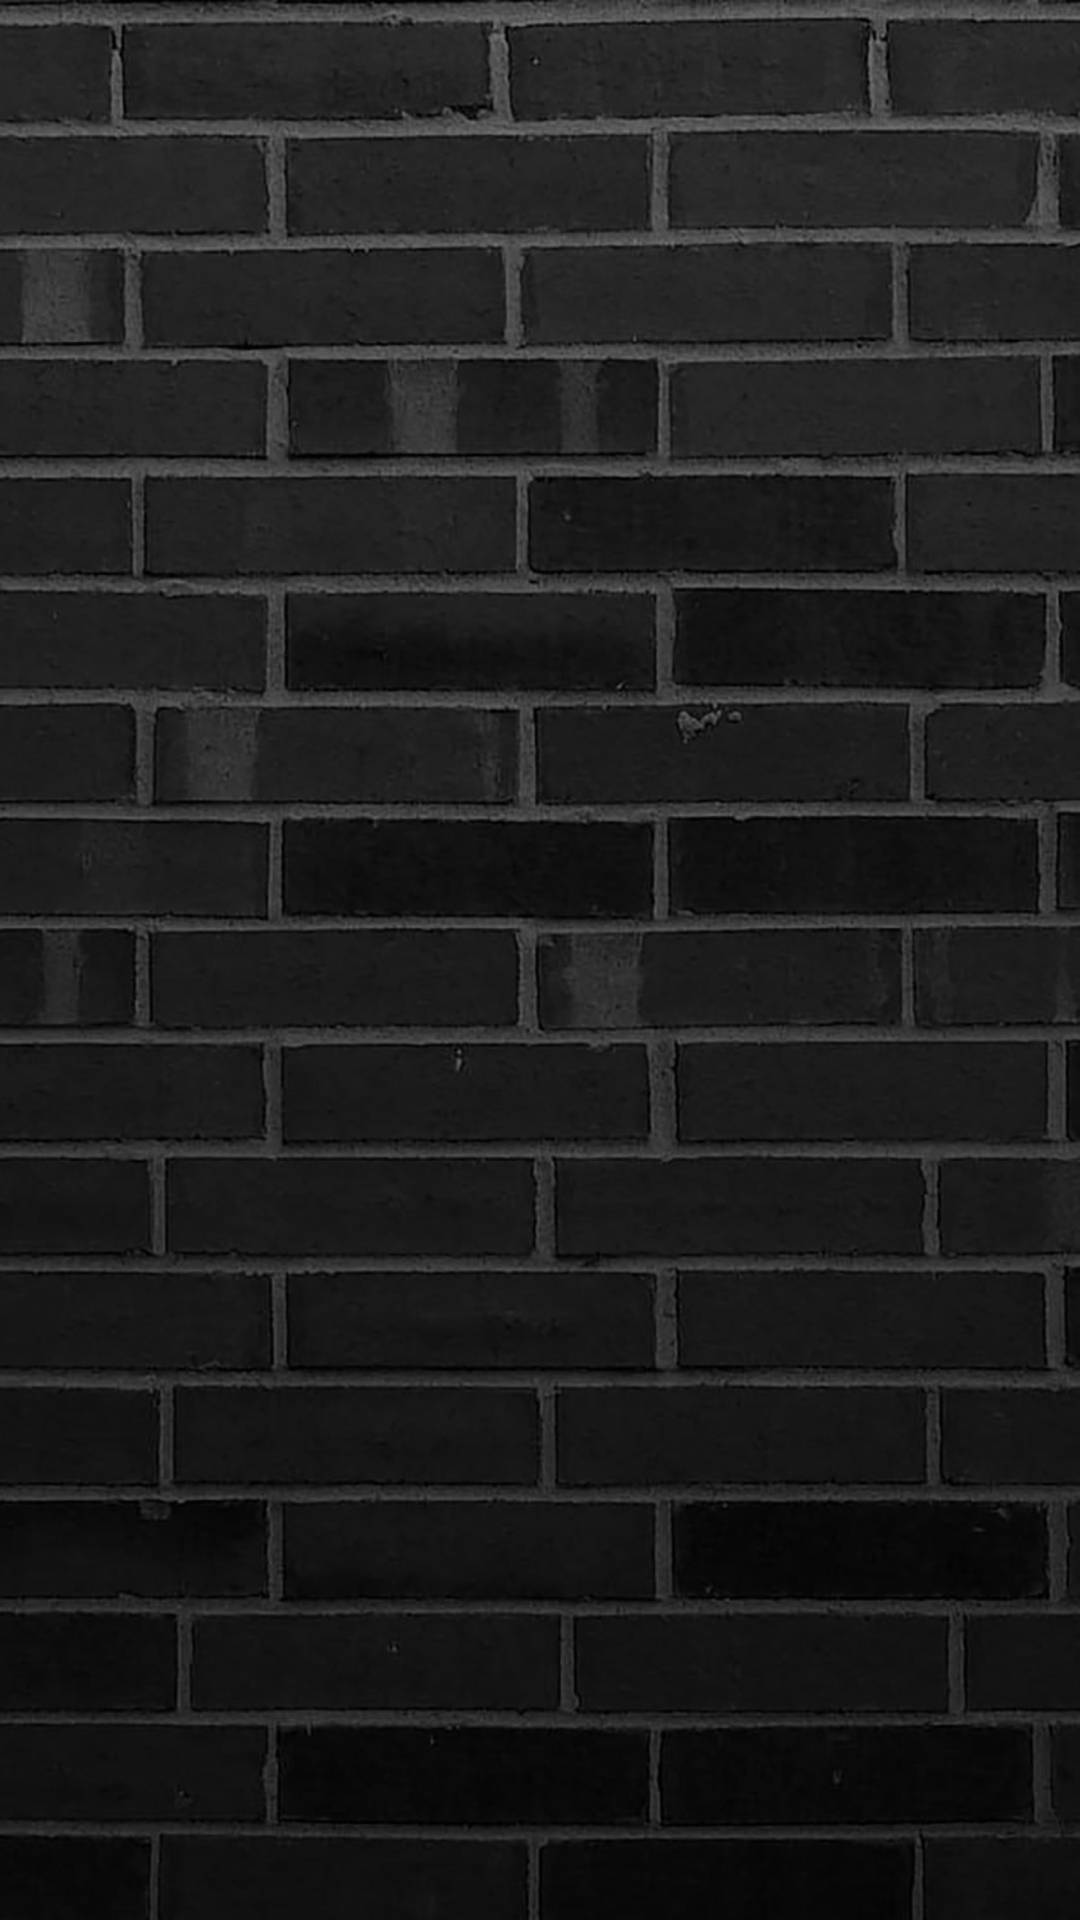 Bricked Wall Black Iphone 6 Plus Wallpaper